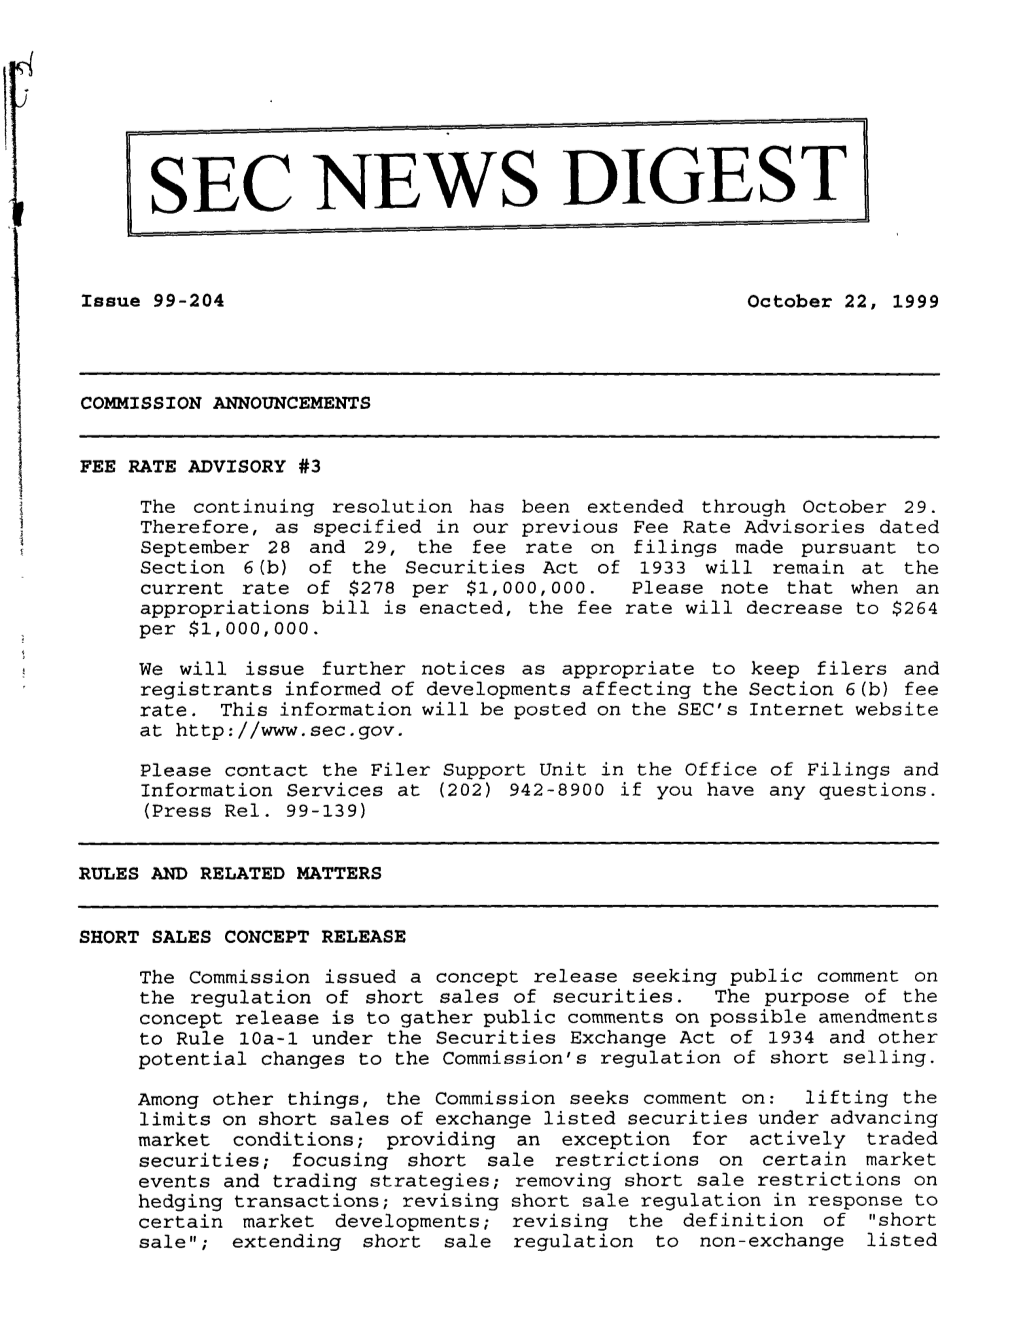 SEC News Digest, 10-22-1999